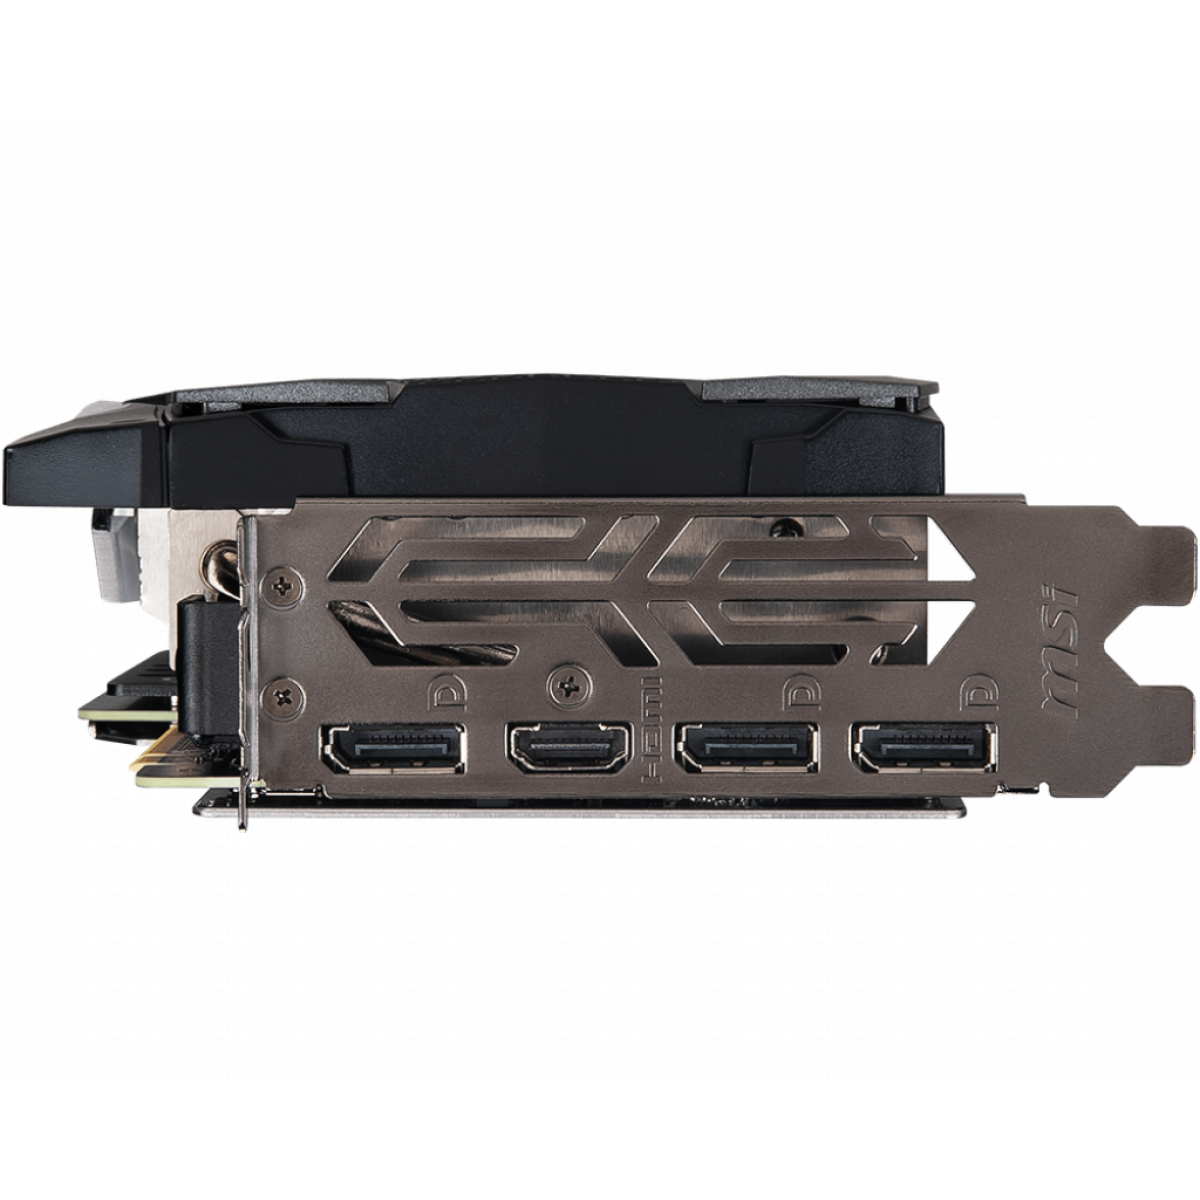 MSI RTX 2070 SUPER GAMING X TRIO DIGITAL LED